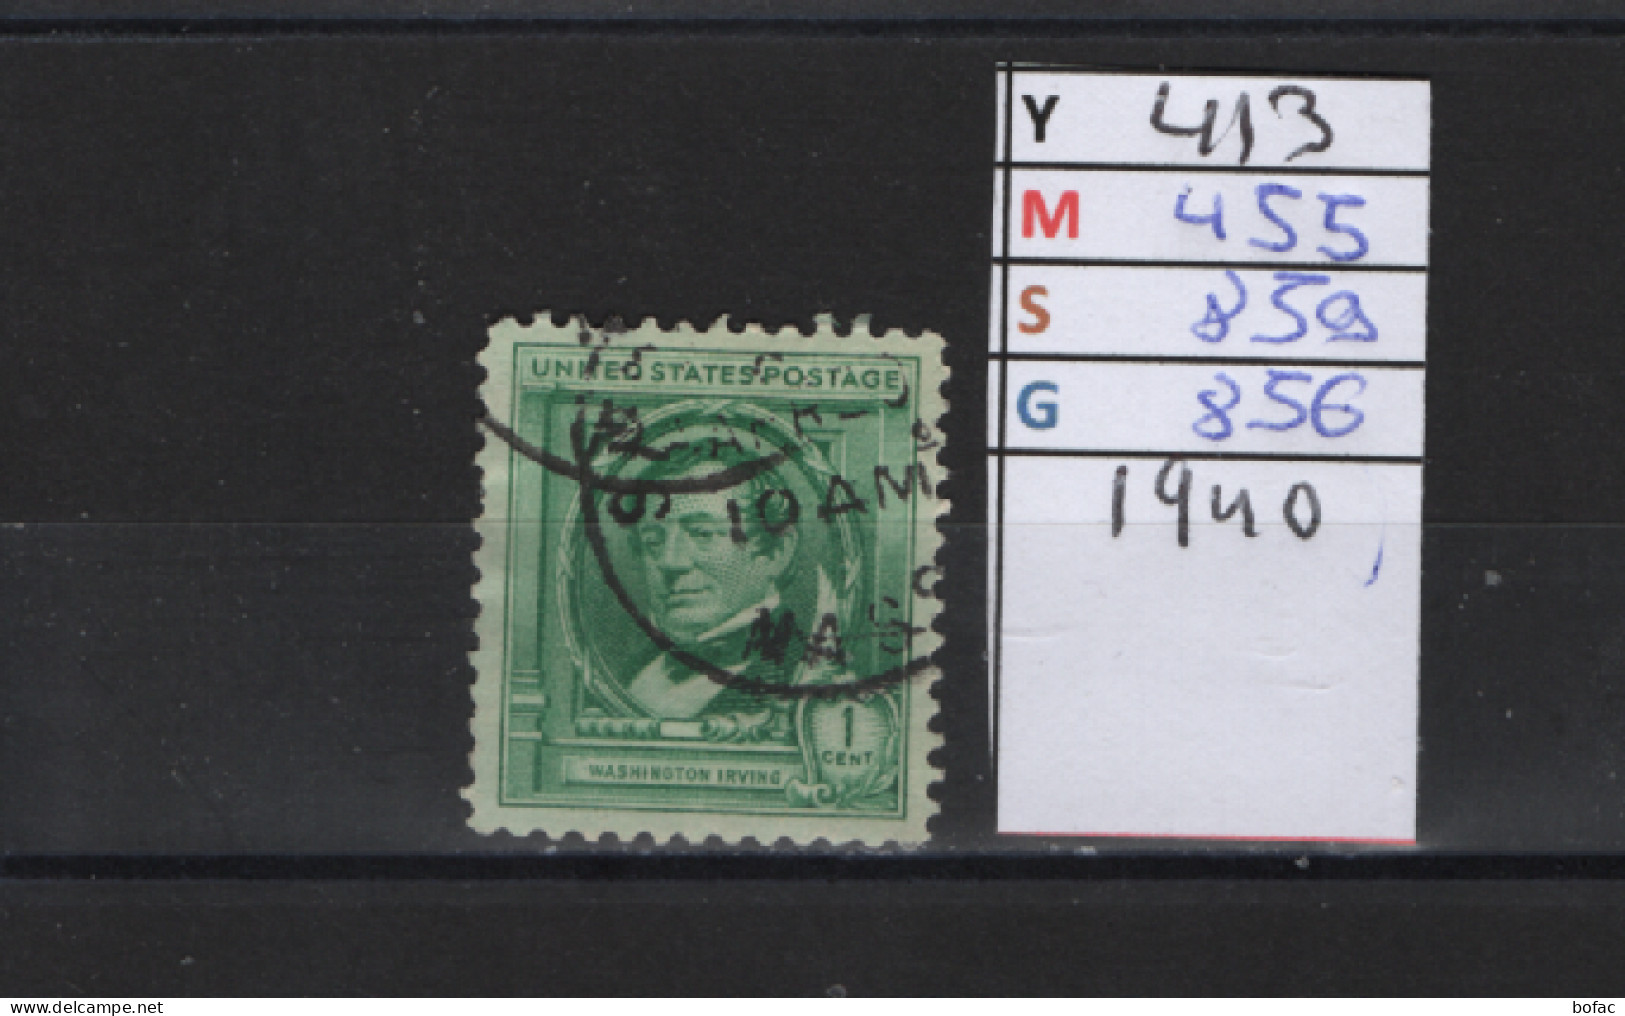 PRIX FIXE Obl 413 YT 455 MIC 859 SCO 956 GIB Washington Irving 1940 Etats Unis 58A/02 - Used Stamps